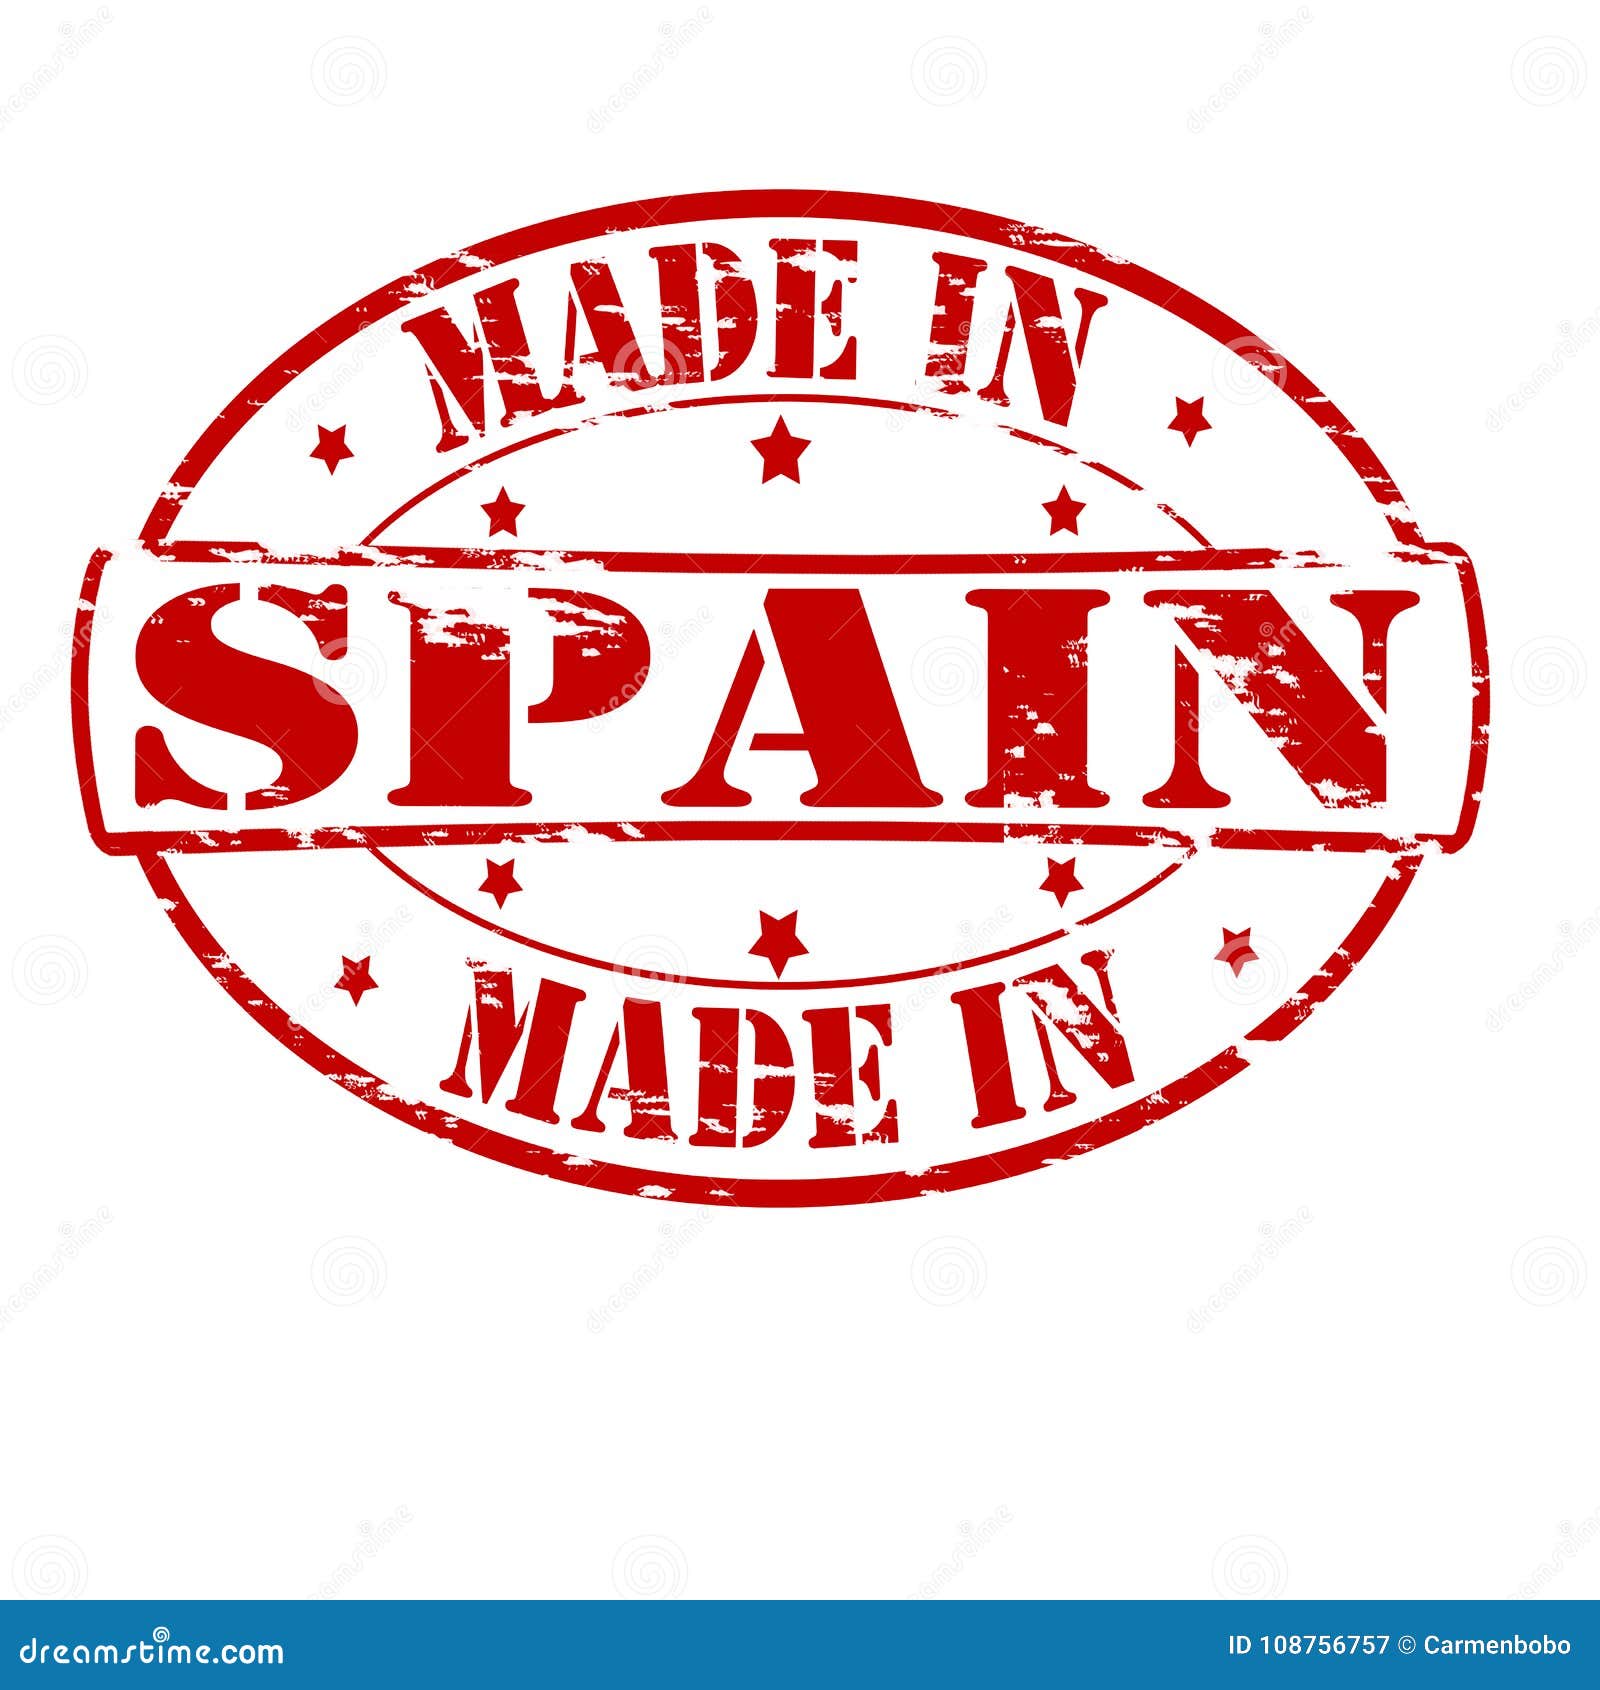 Made in Spain stock illustration. Illustration of grunge - 108756757